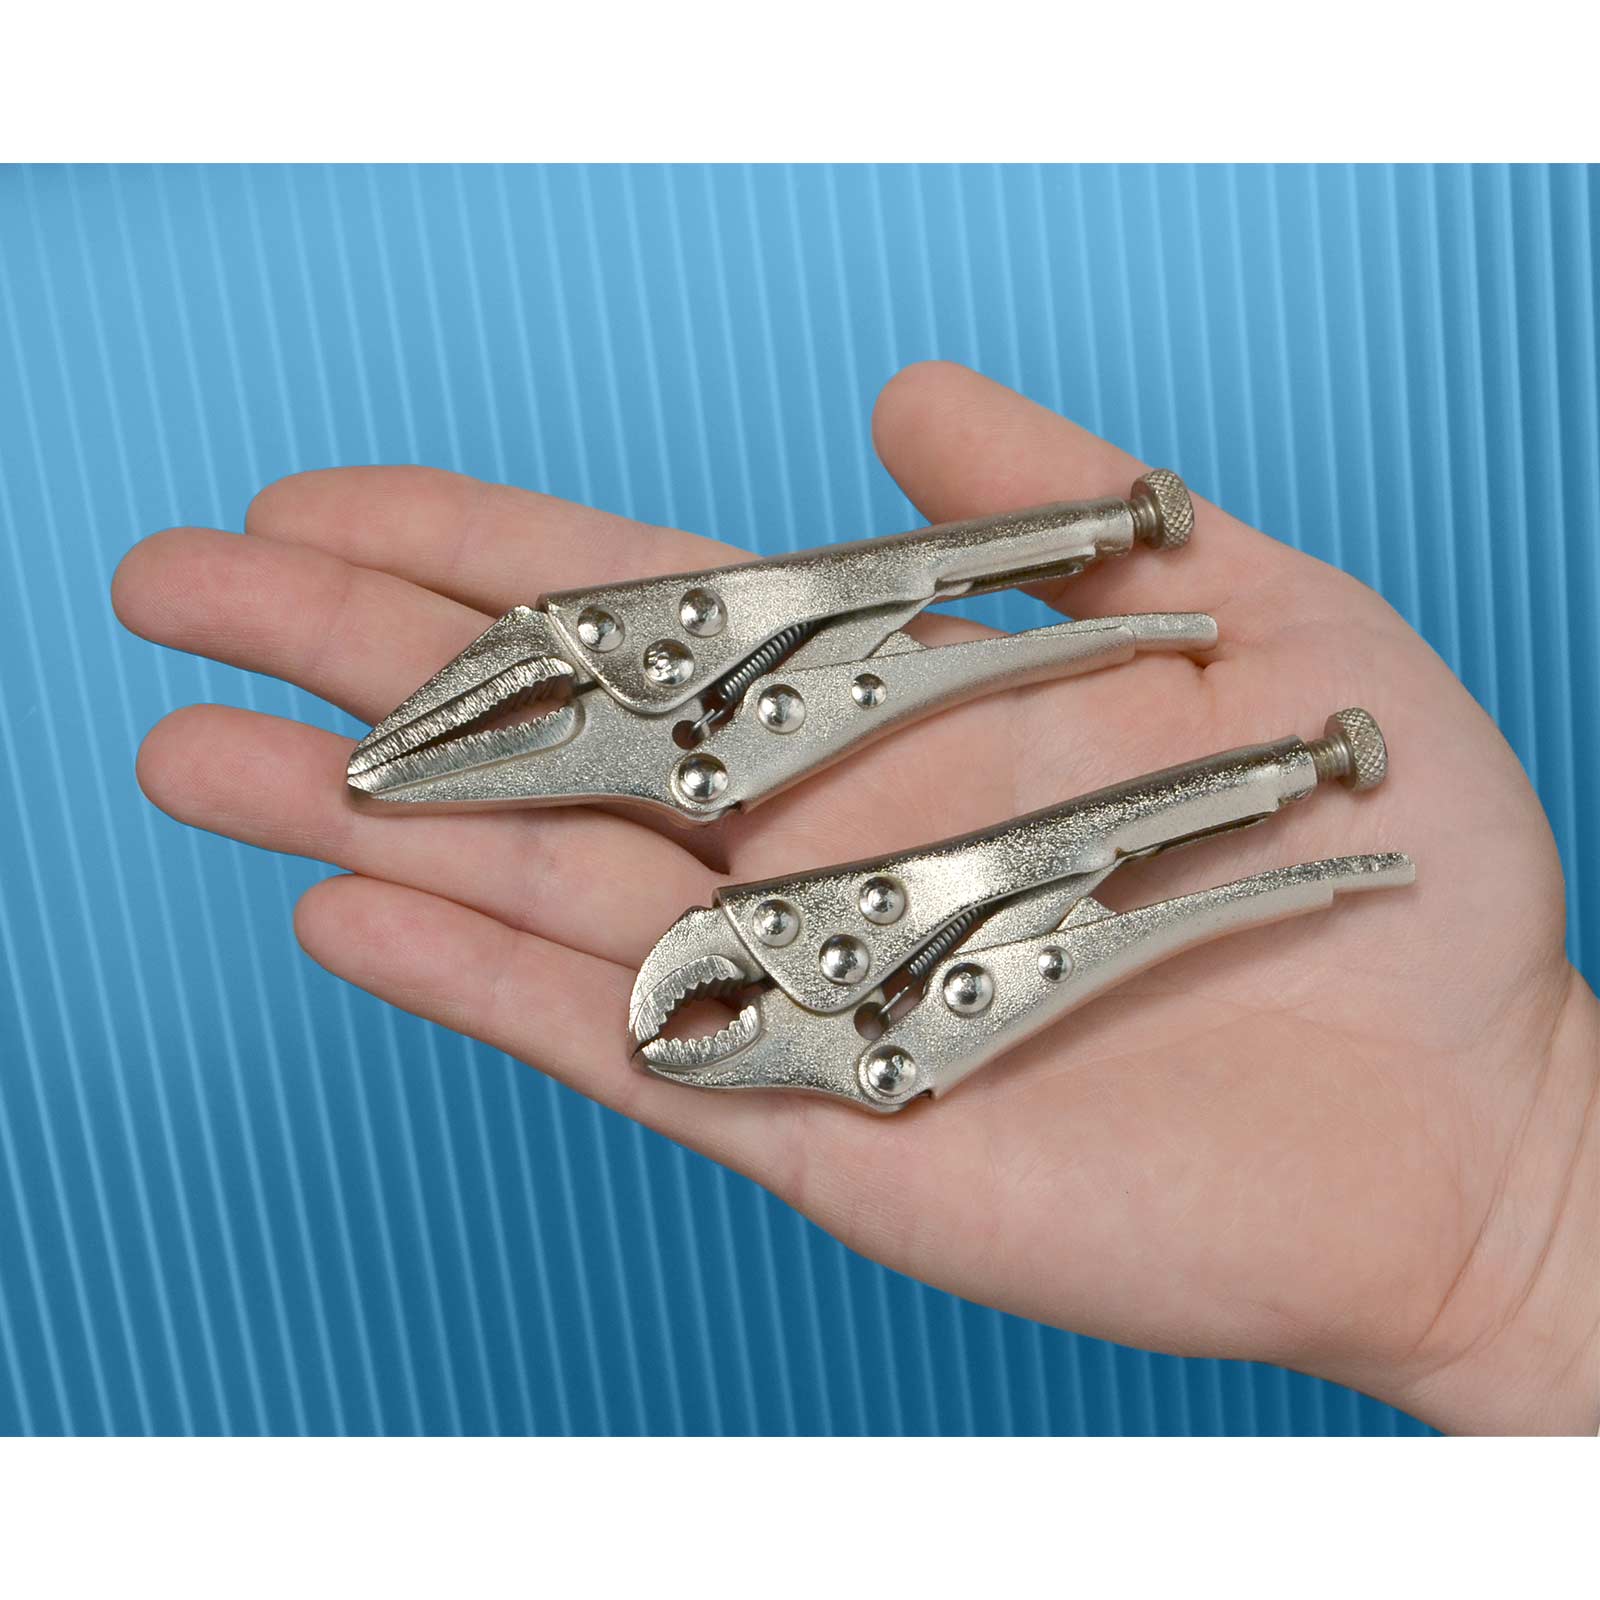 Mini Locking Pliers, set of 2 - Micro - Mark Nippers